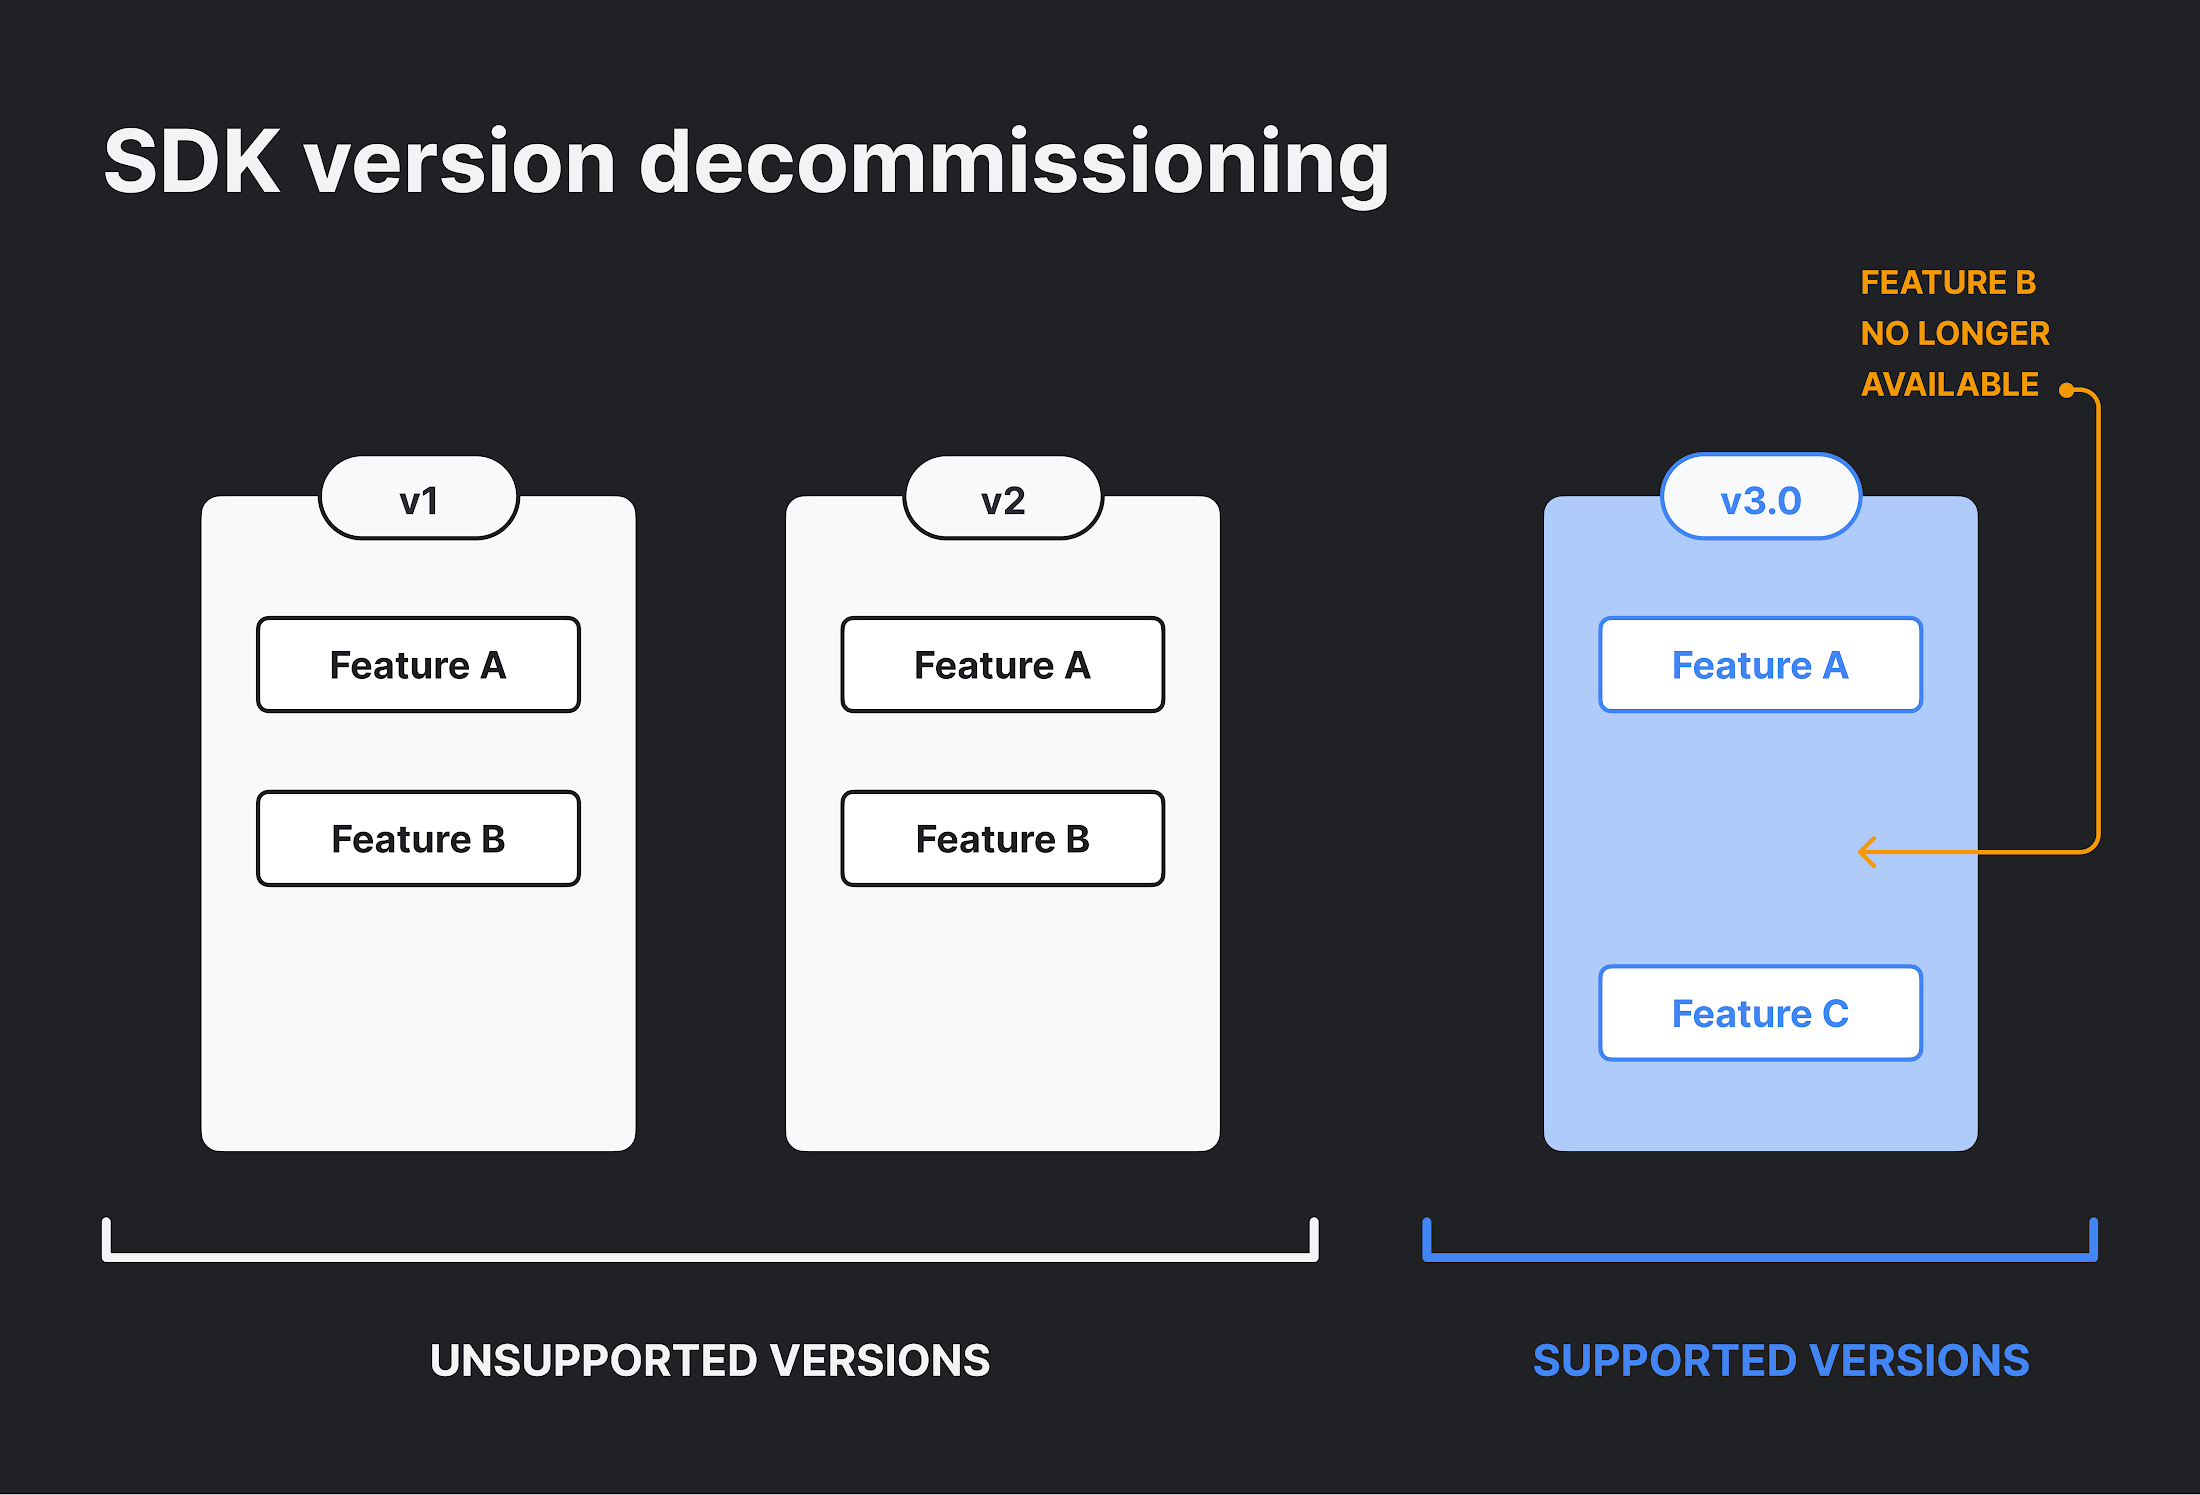 SDK Version Decommissioning